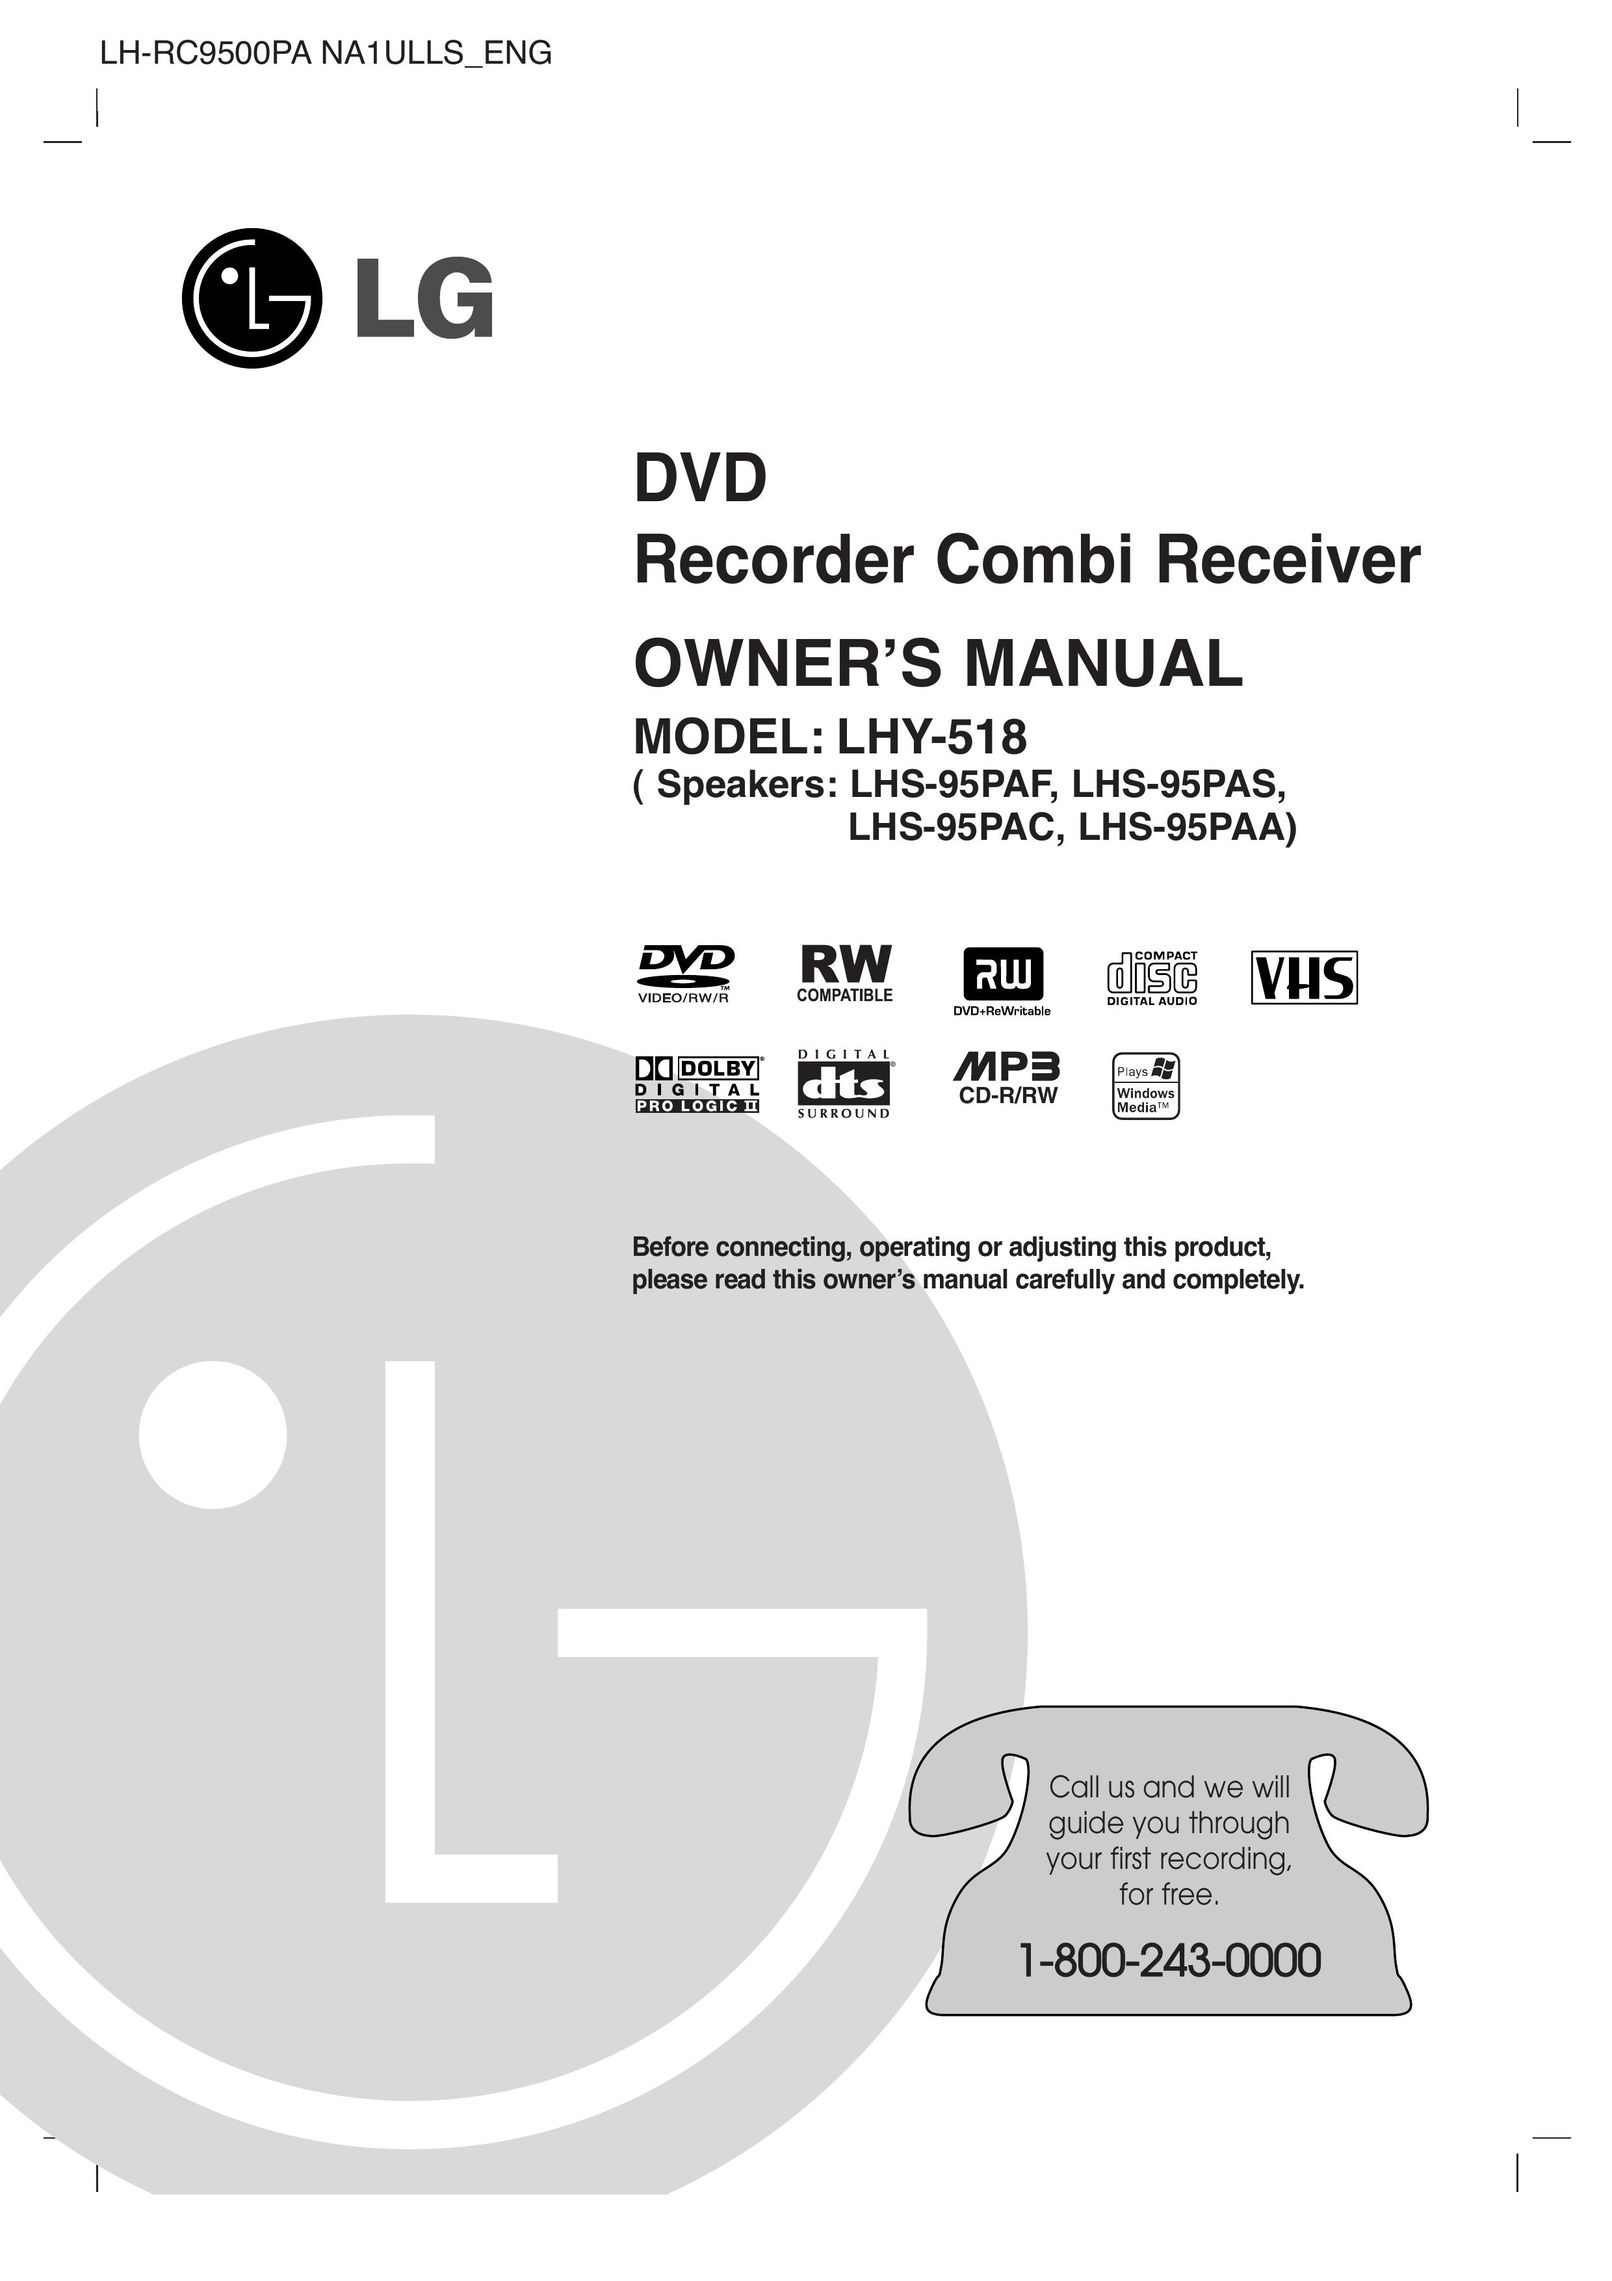 LG Electronics LHY-518 DVD Recorder User Manual